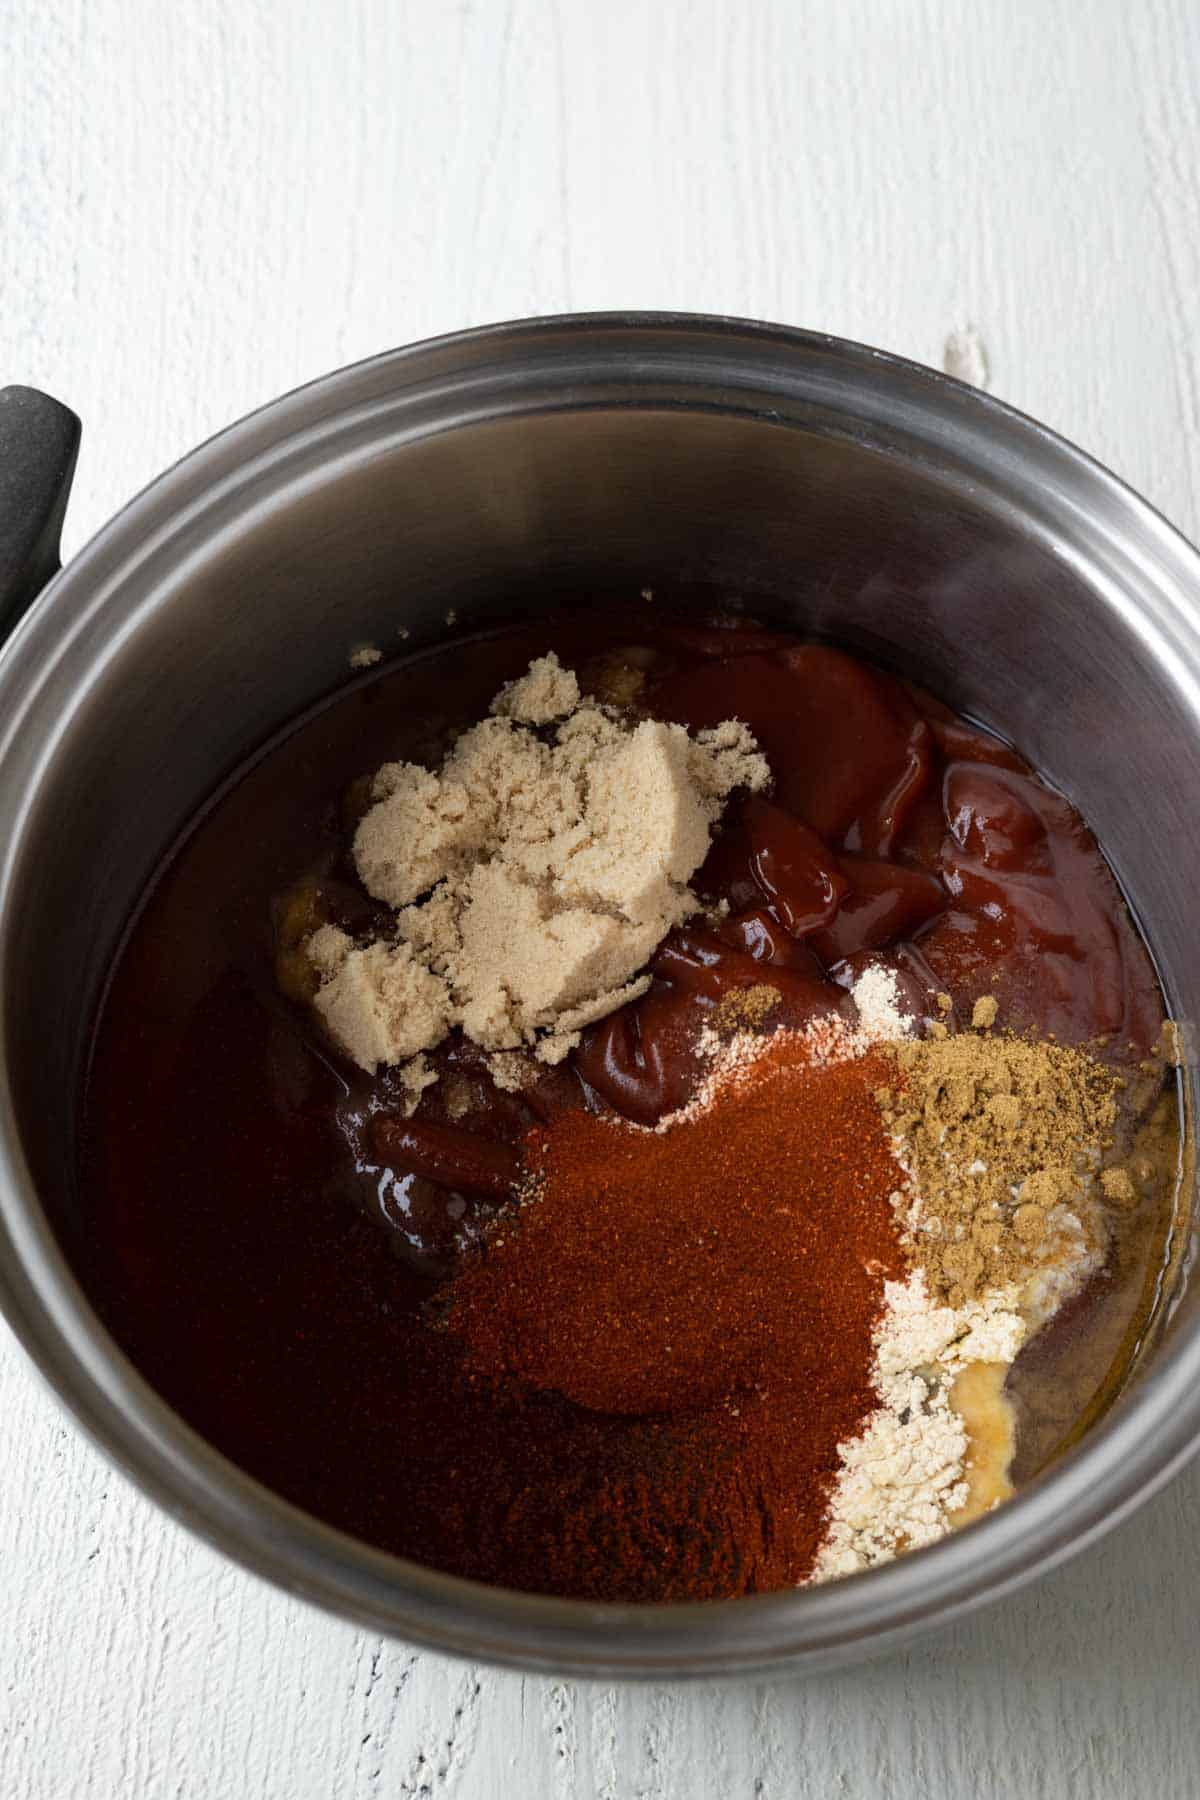 Ketchup, brown sugar, seasonings, honey, apple cider vinegar, and seasonings in a saucepan to make homemade bbq sauce.